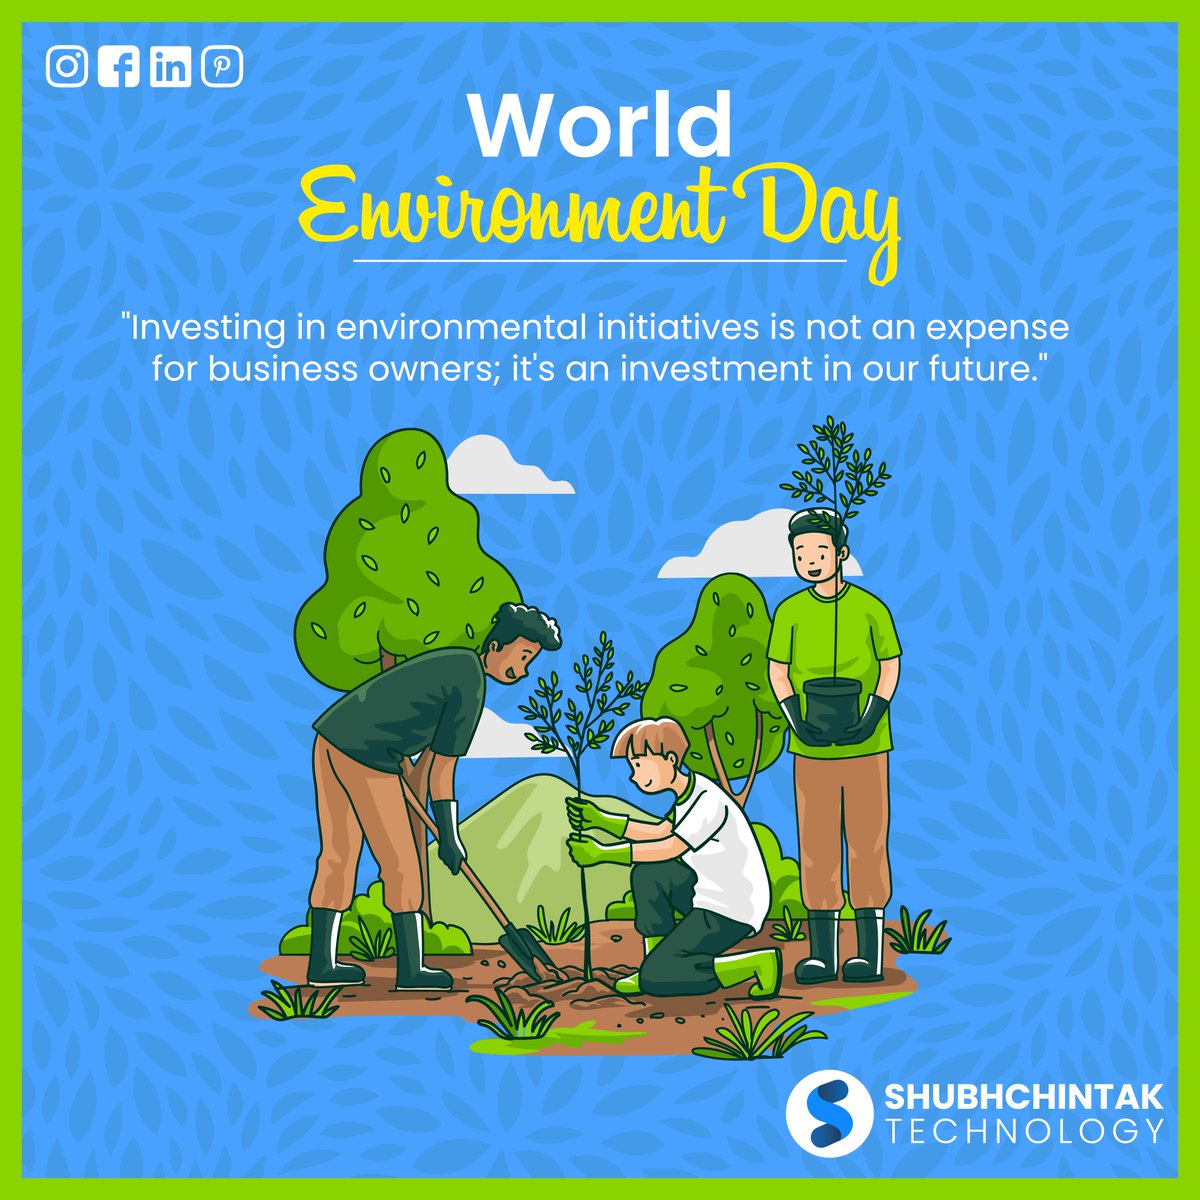 Happy World Environment Day! 🍃 #worldenvironmentday #nature #environment #sustainability #save environment #sustainablebusiness #India #mumbai #Shubhchintak #startups